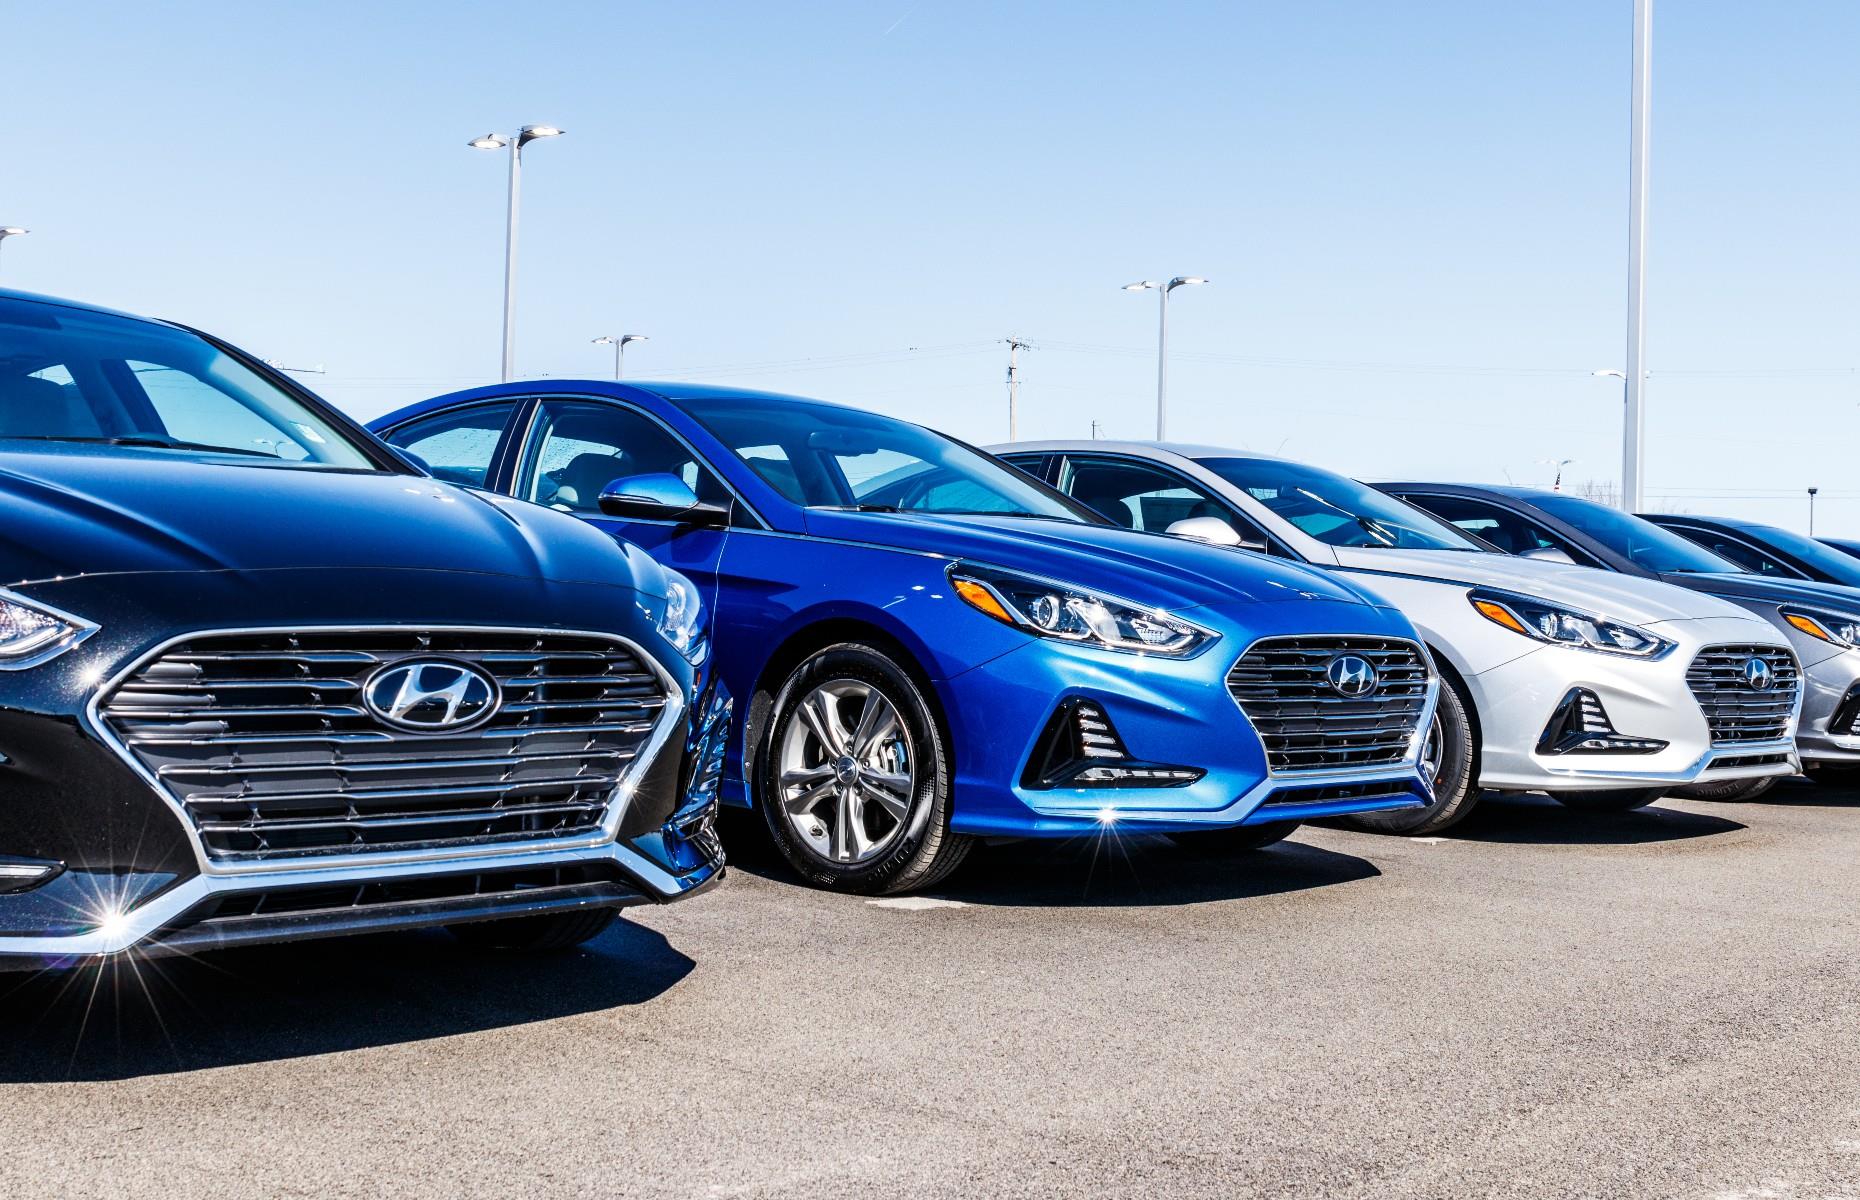 Hyundai automobiles: 239,000 units